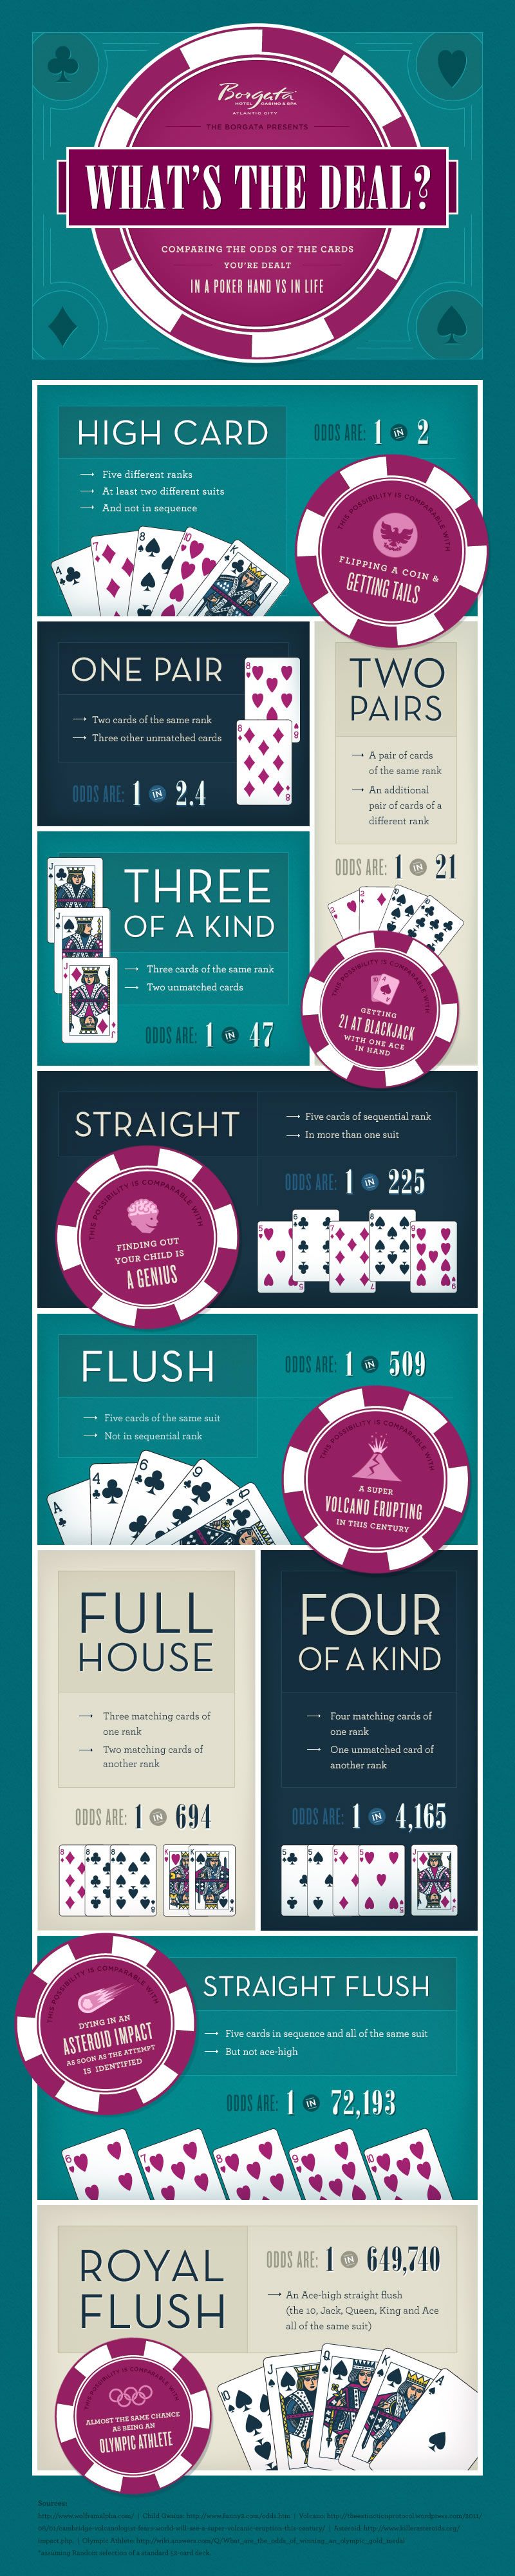 Does The Casino Make Money On Poker